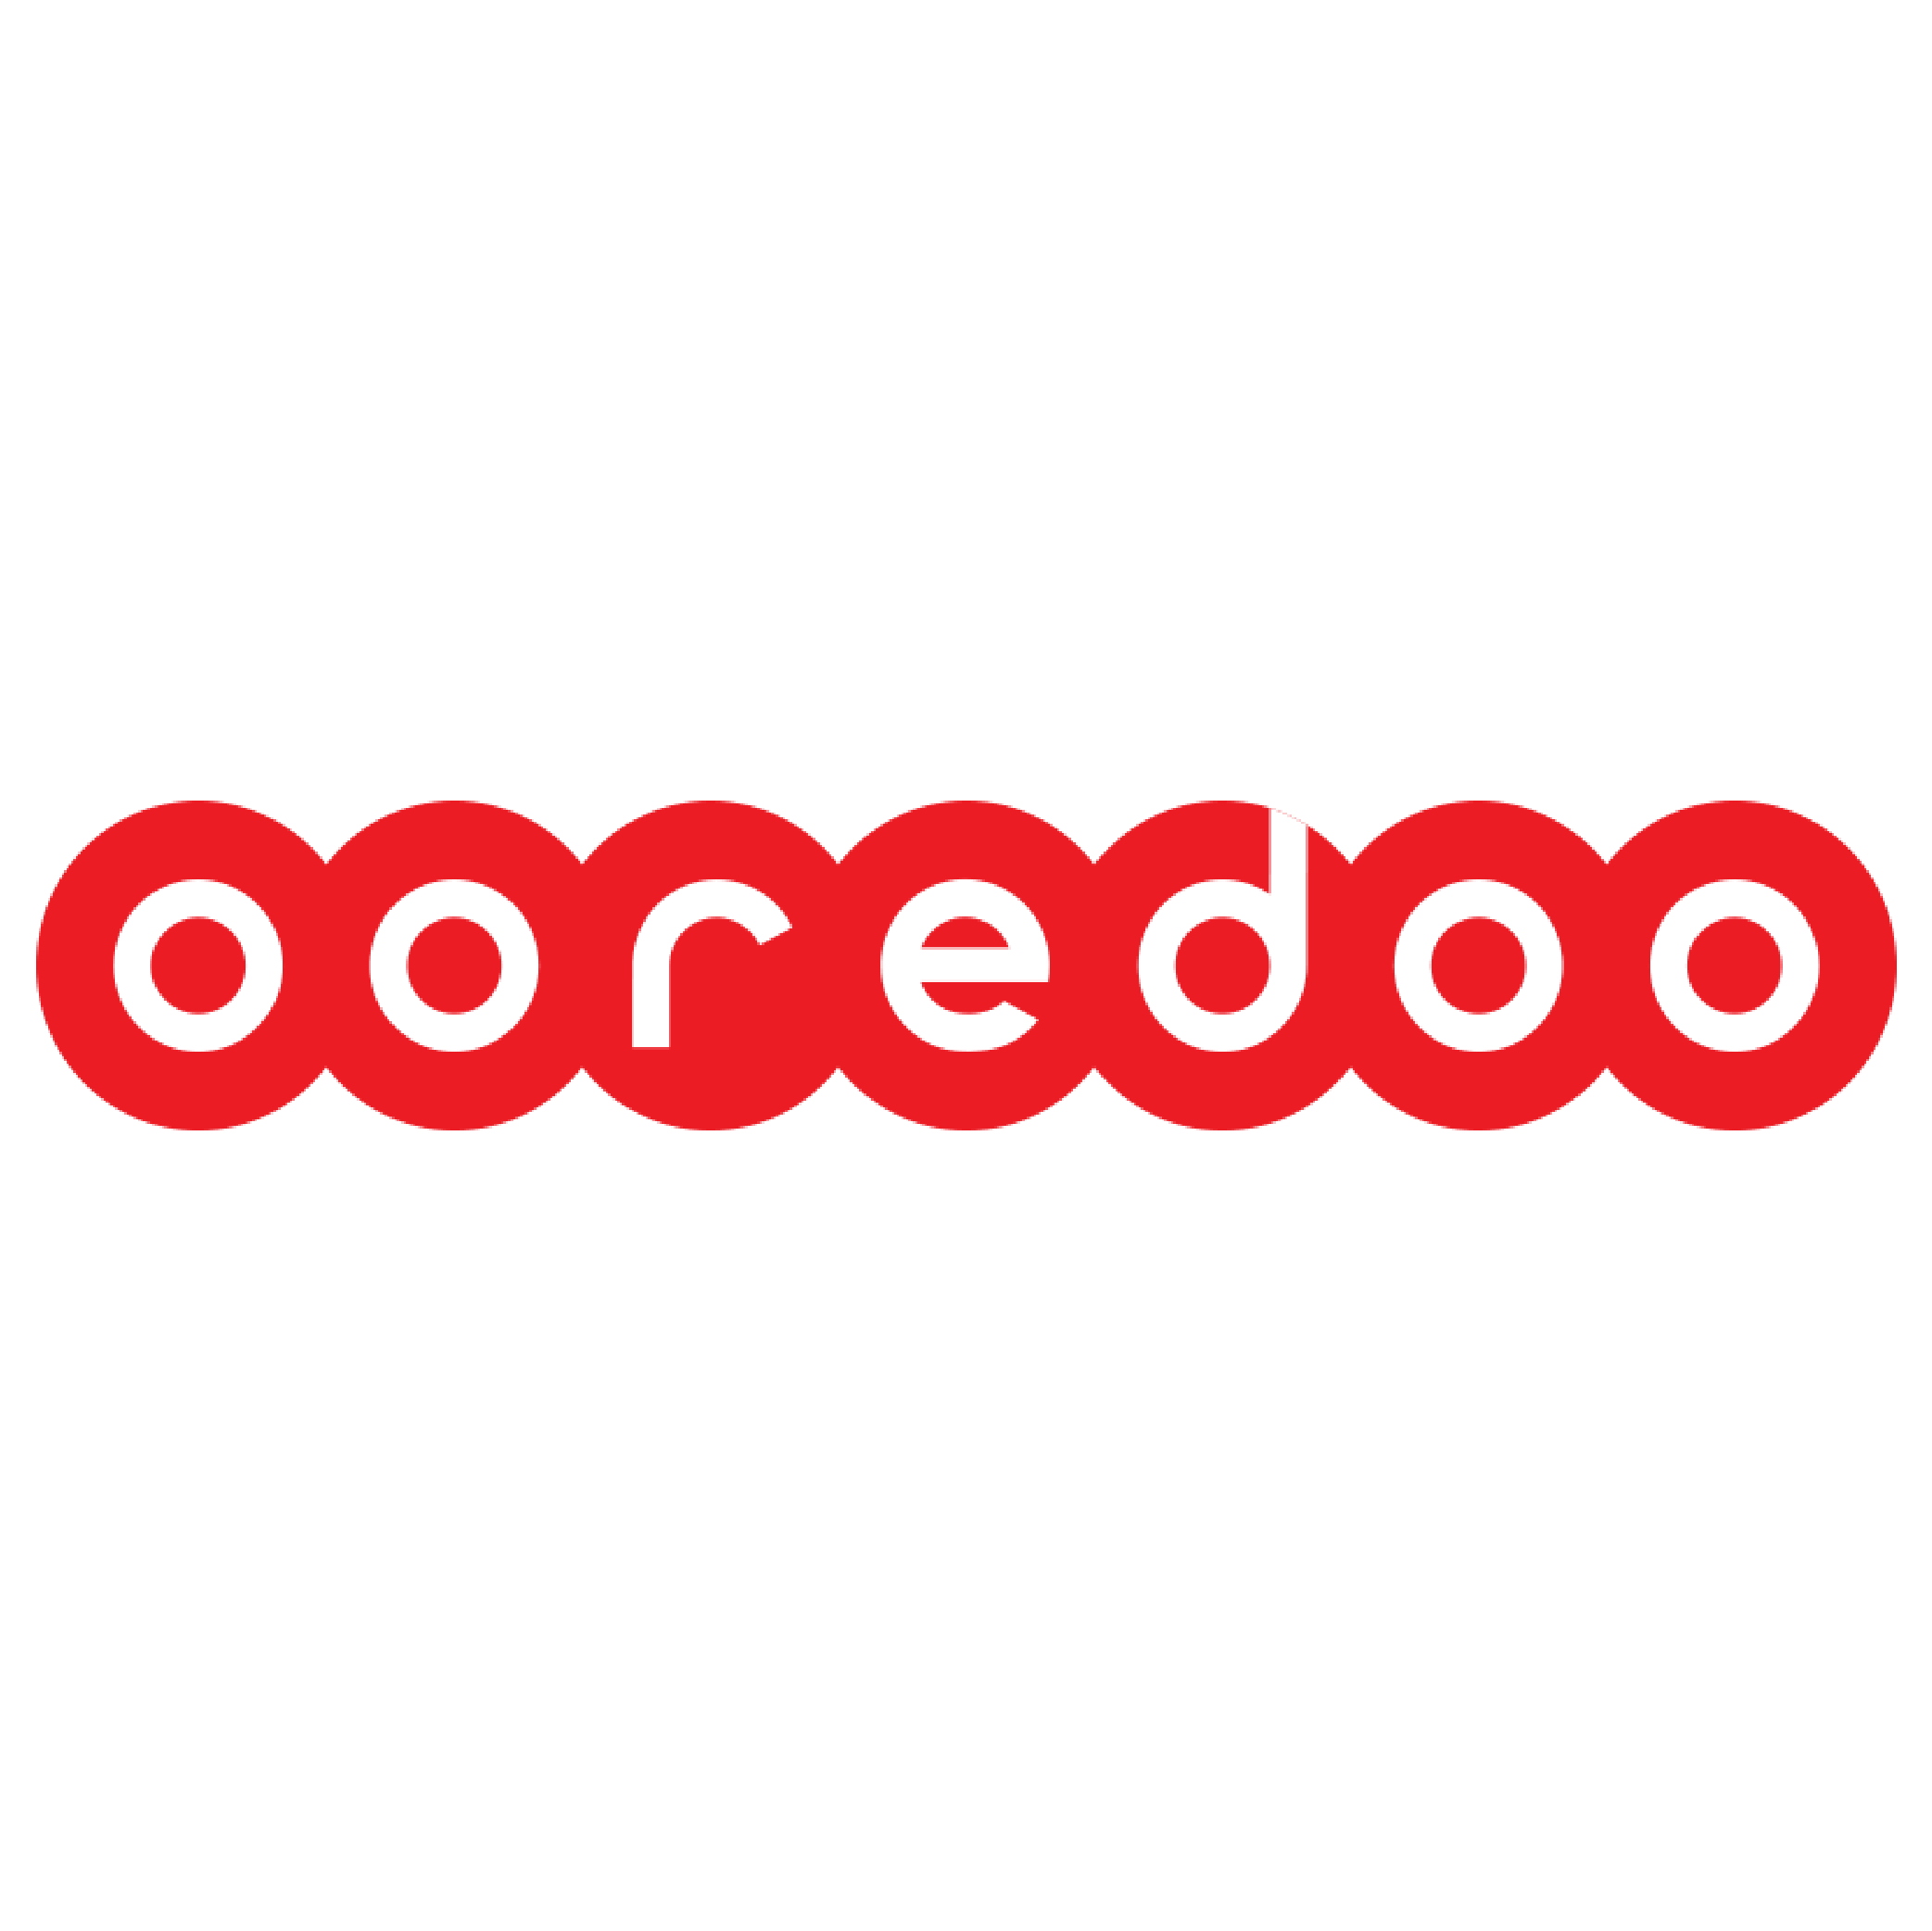 ooredo logo